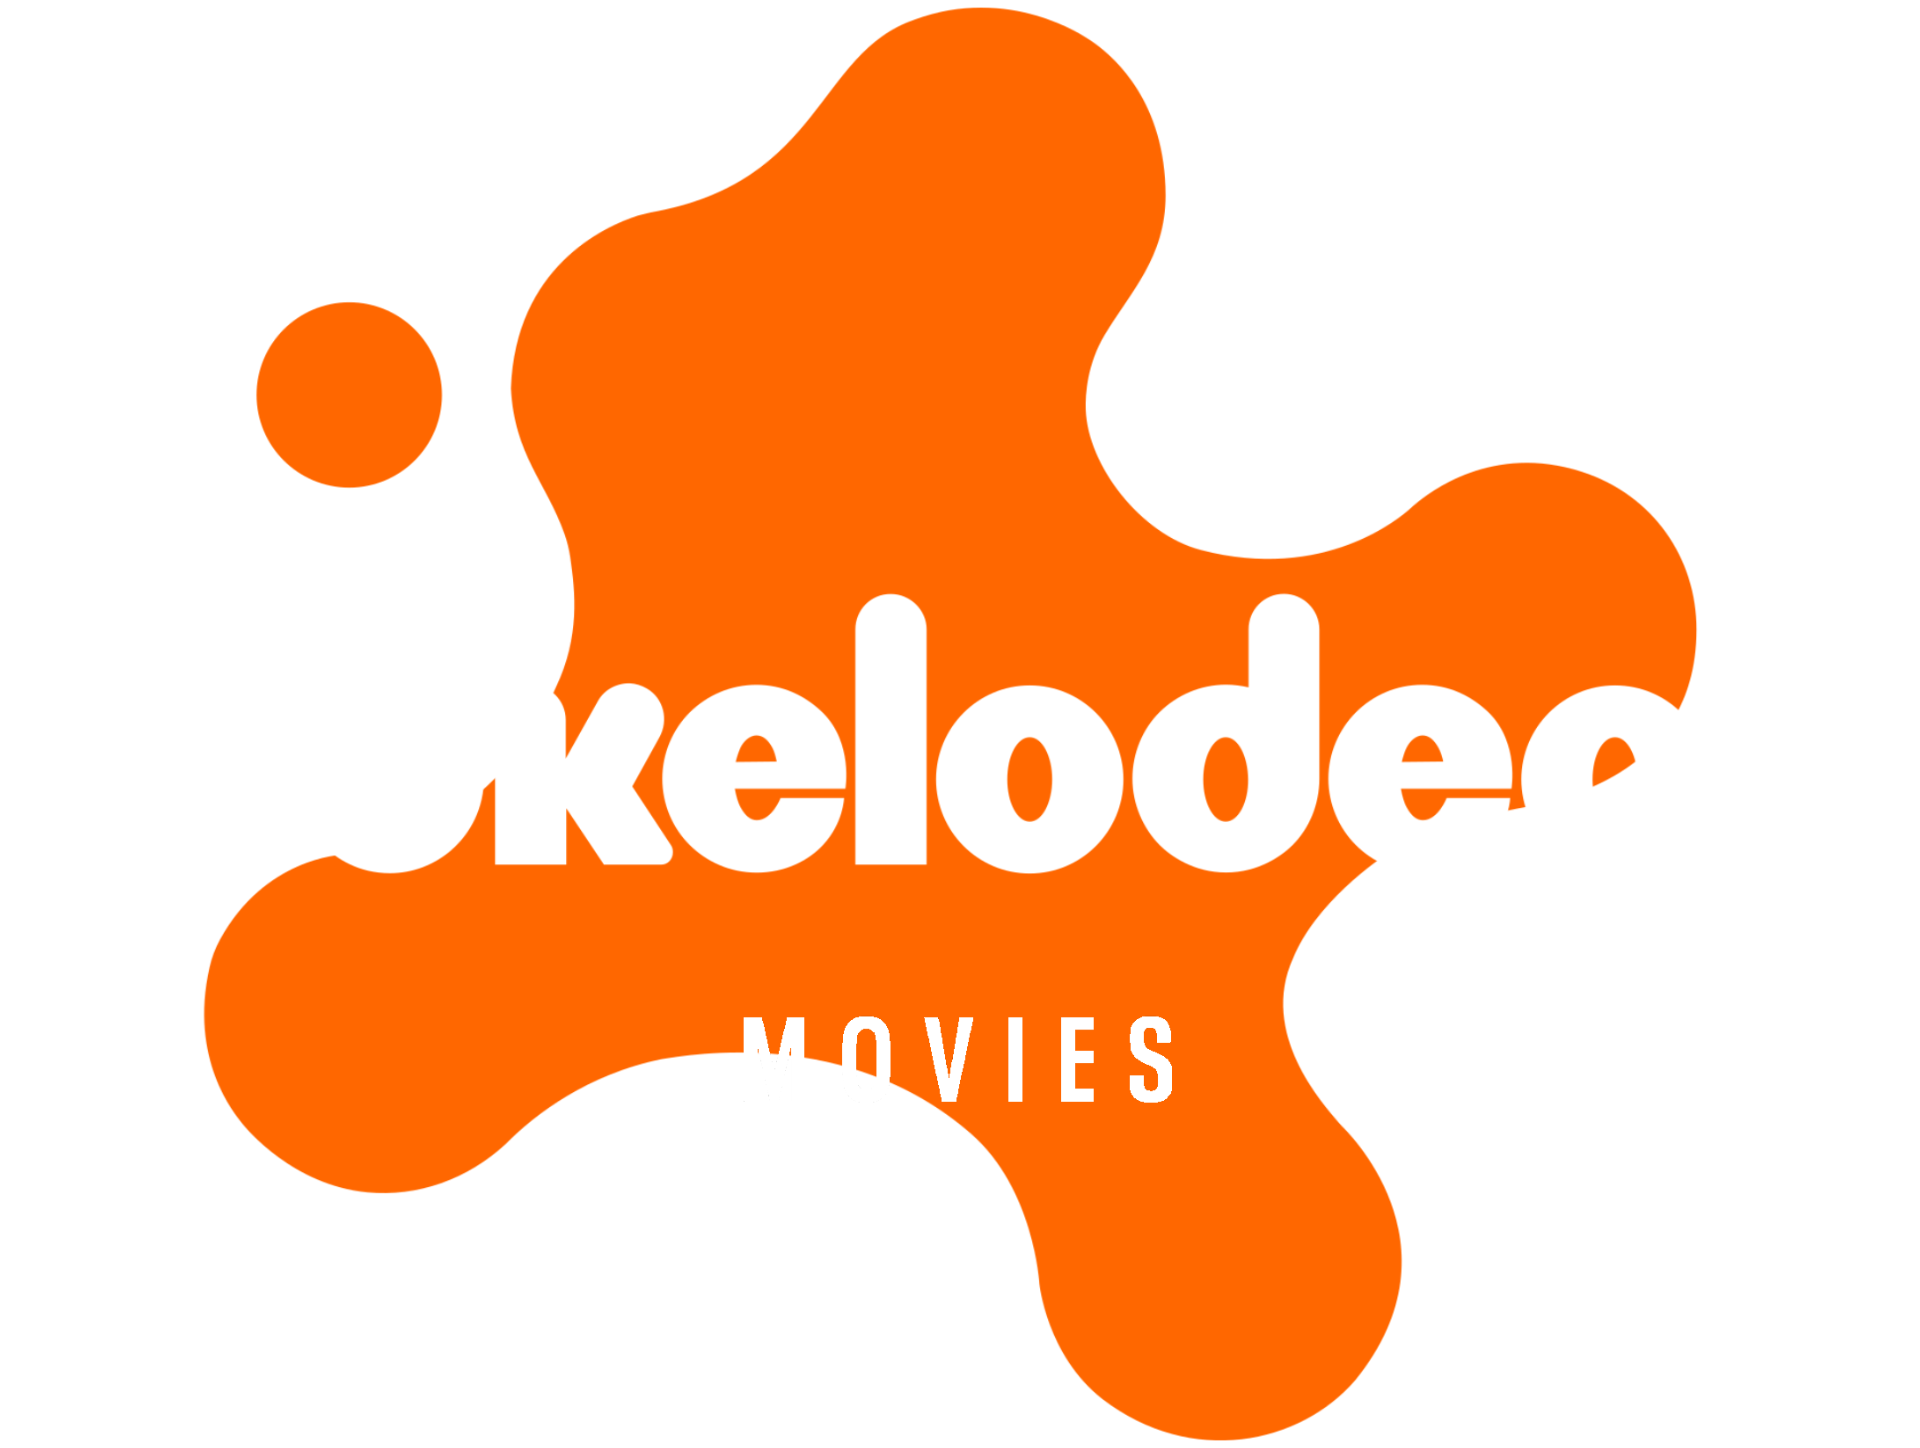 Nickelodeon Movies new 2023 logo by VictorPinas on DeviantArt